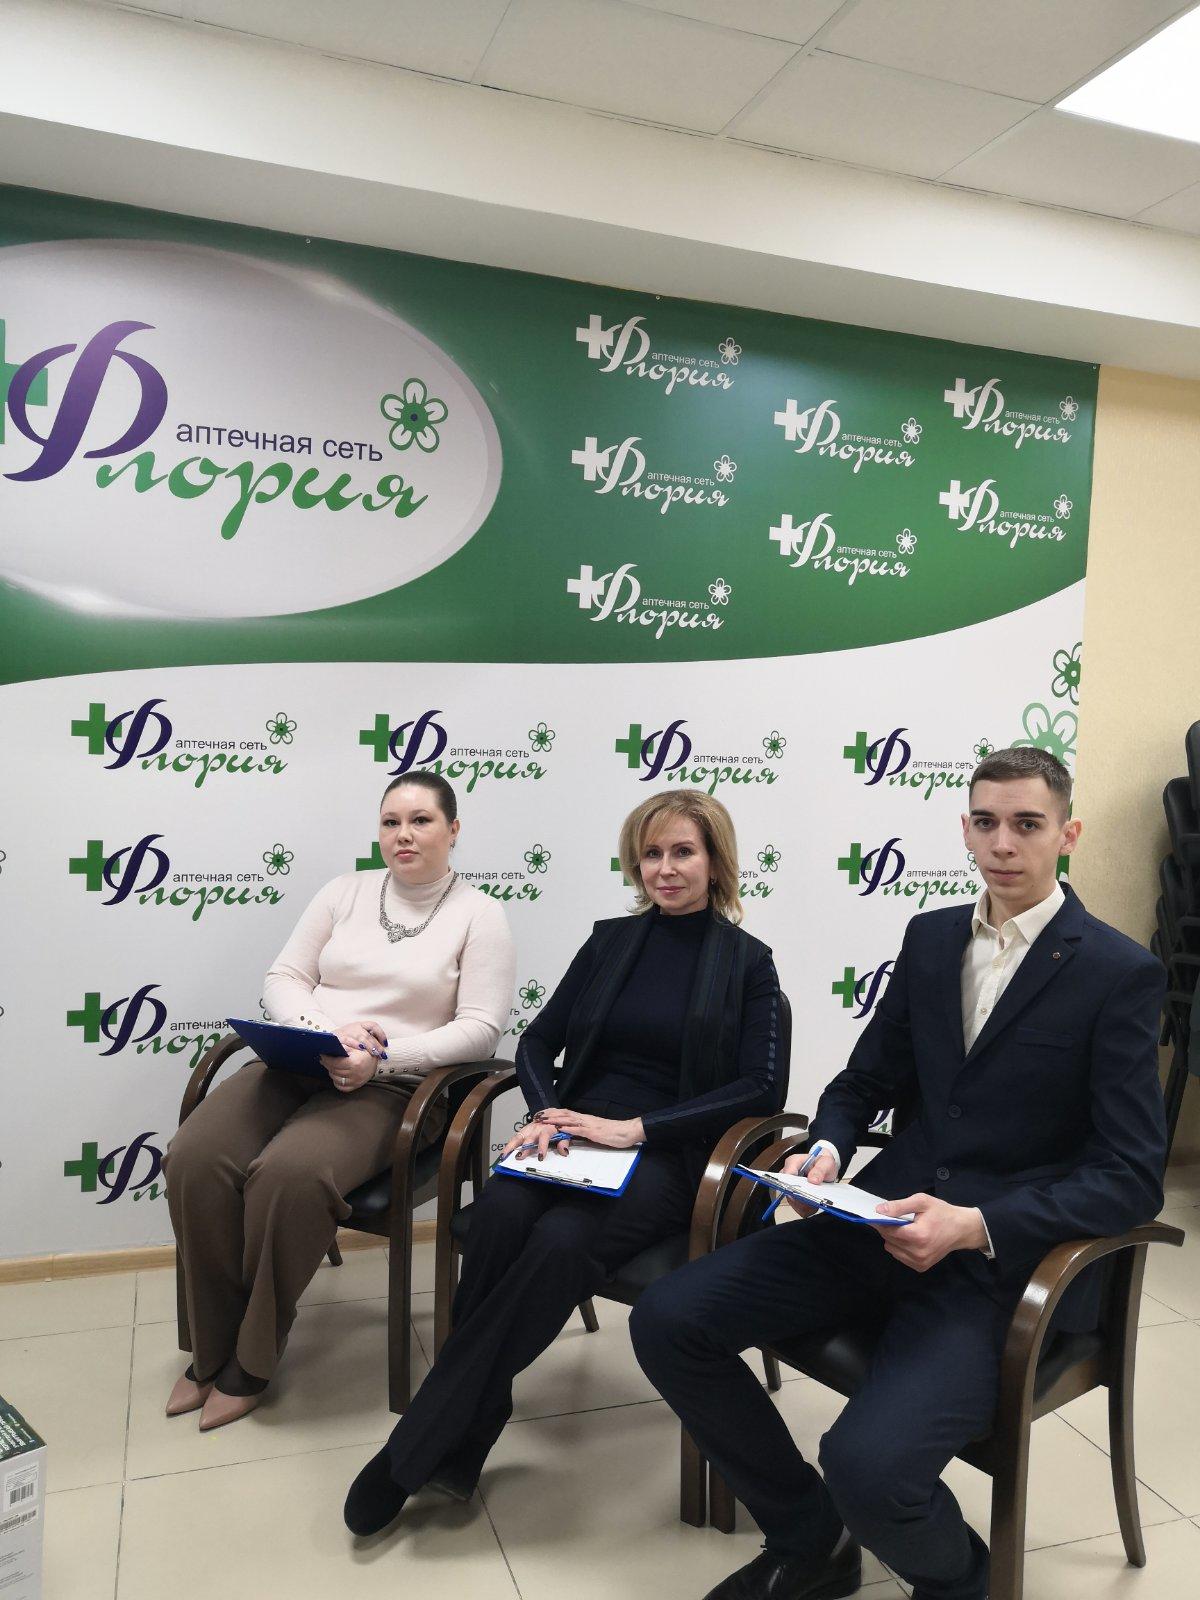 Читинка Нина Портнягина стала обладателем сертификата на 100 000 рублей от аптечной сети «Флория»